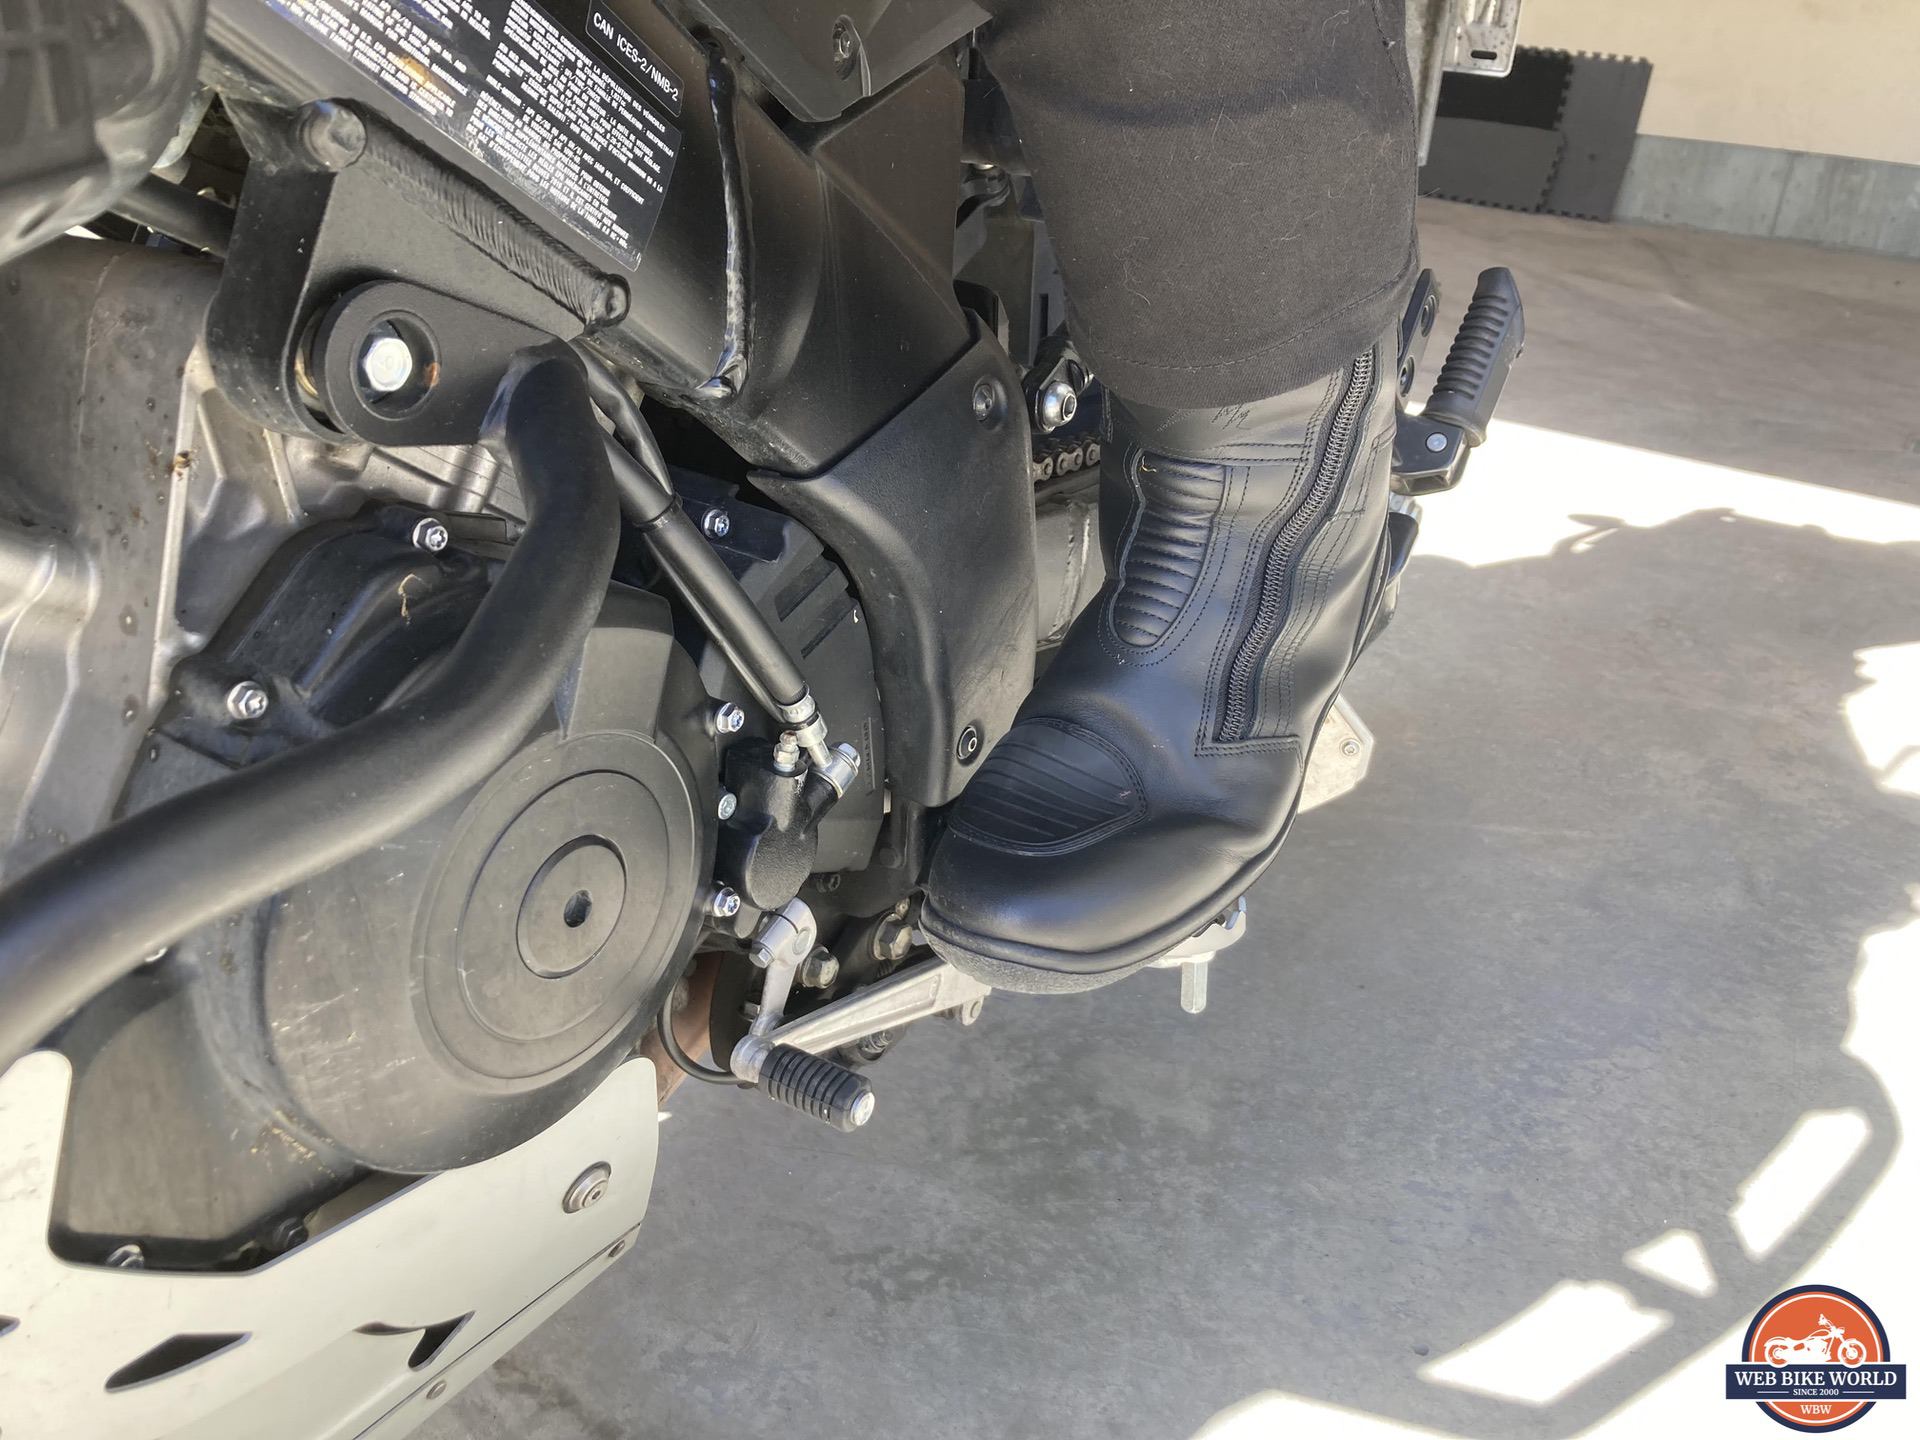 Author wearing Daytona Road Star GTX Boots on motorcycle